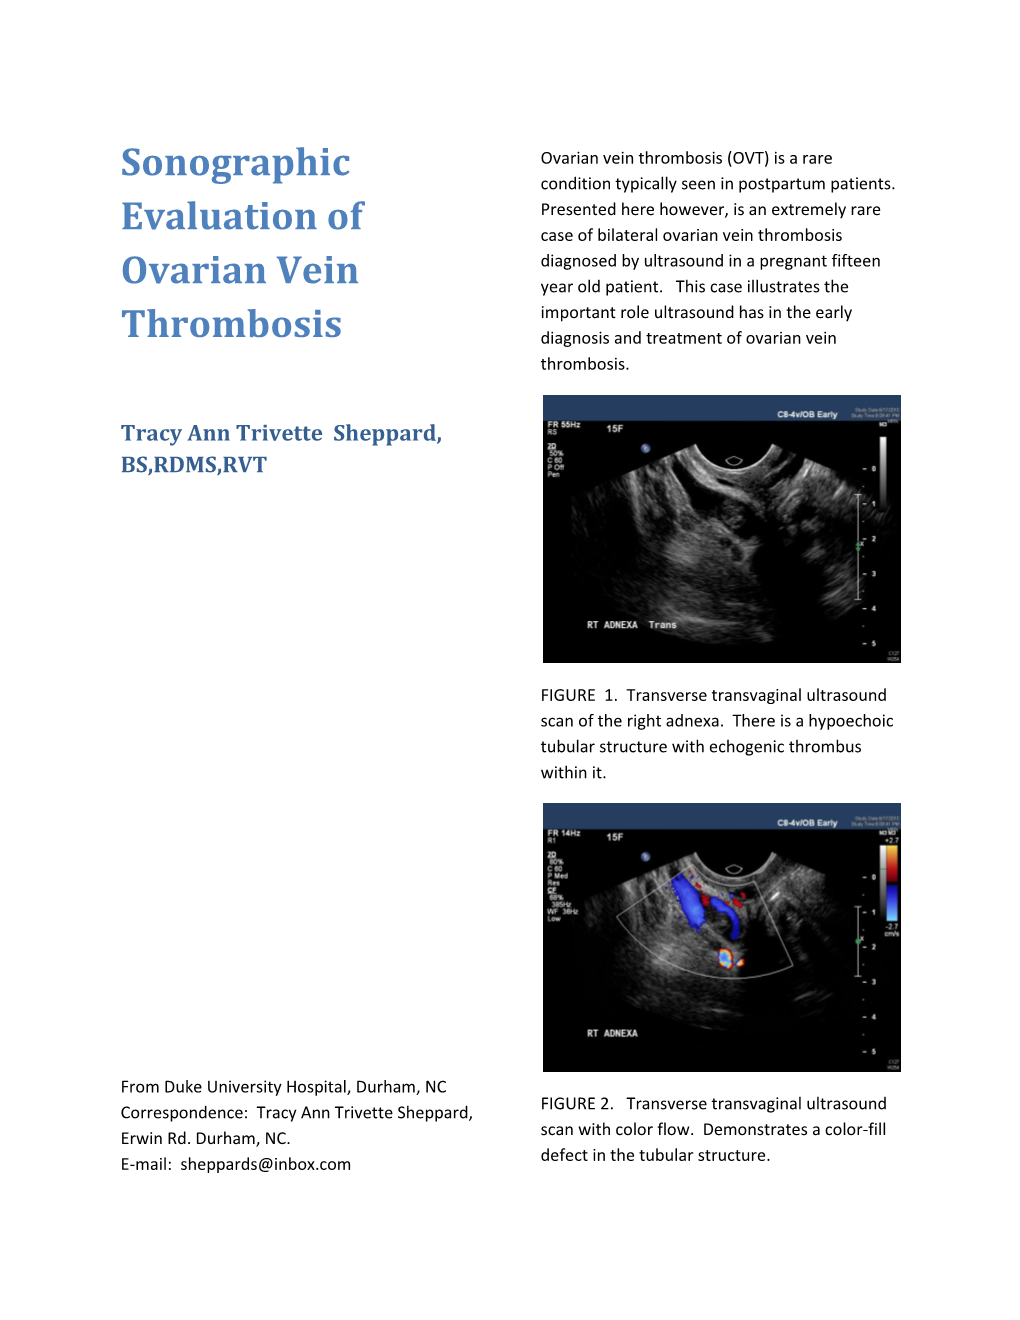 Sonographic Evaluation of Ovarian Vein Thrombosis